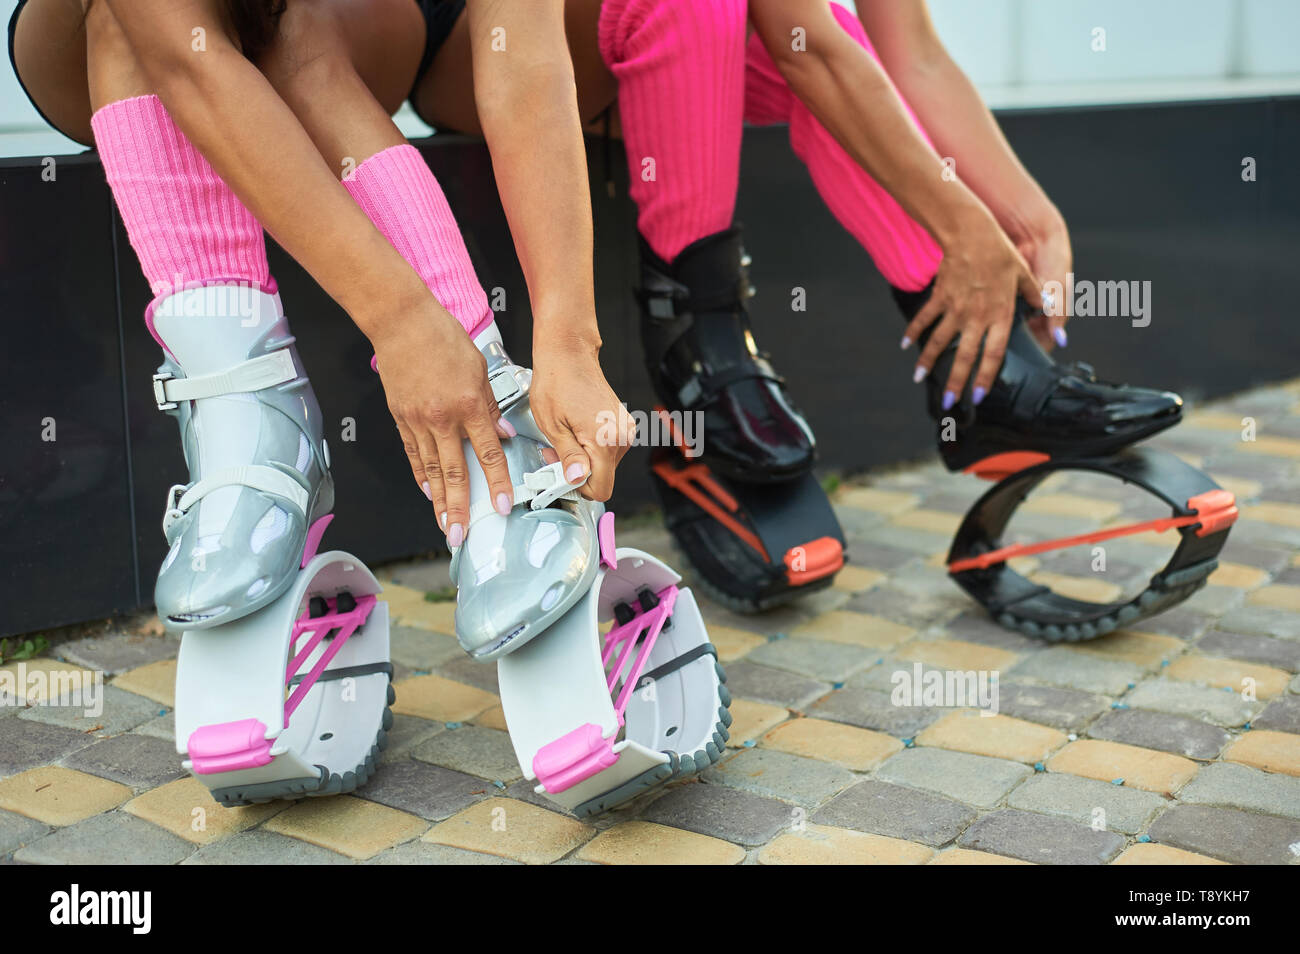 two women put on kangoo jumping boots before workout. Closeup shot